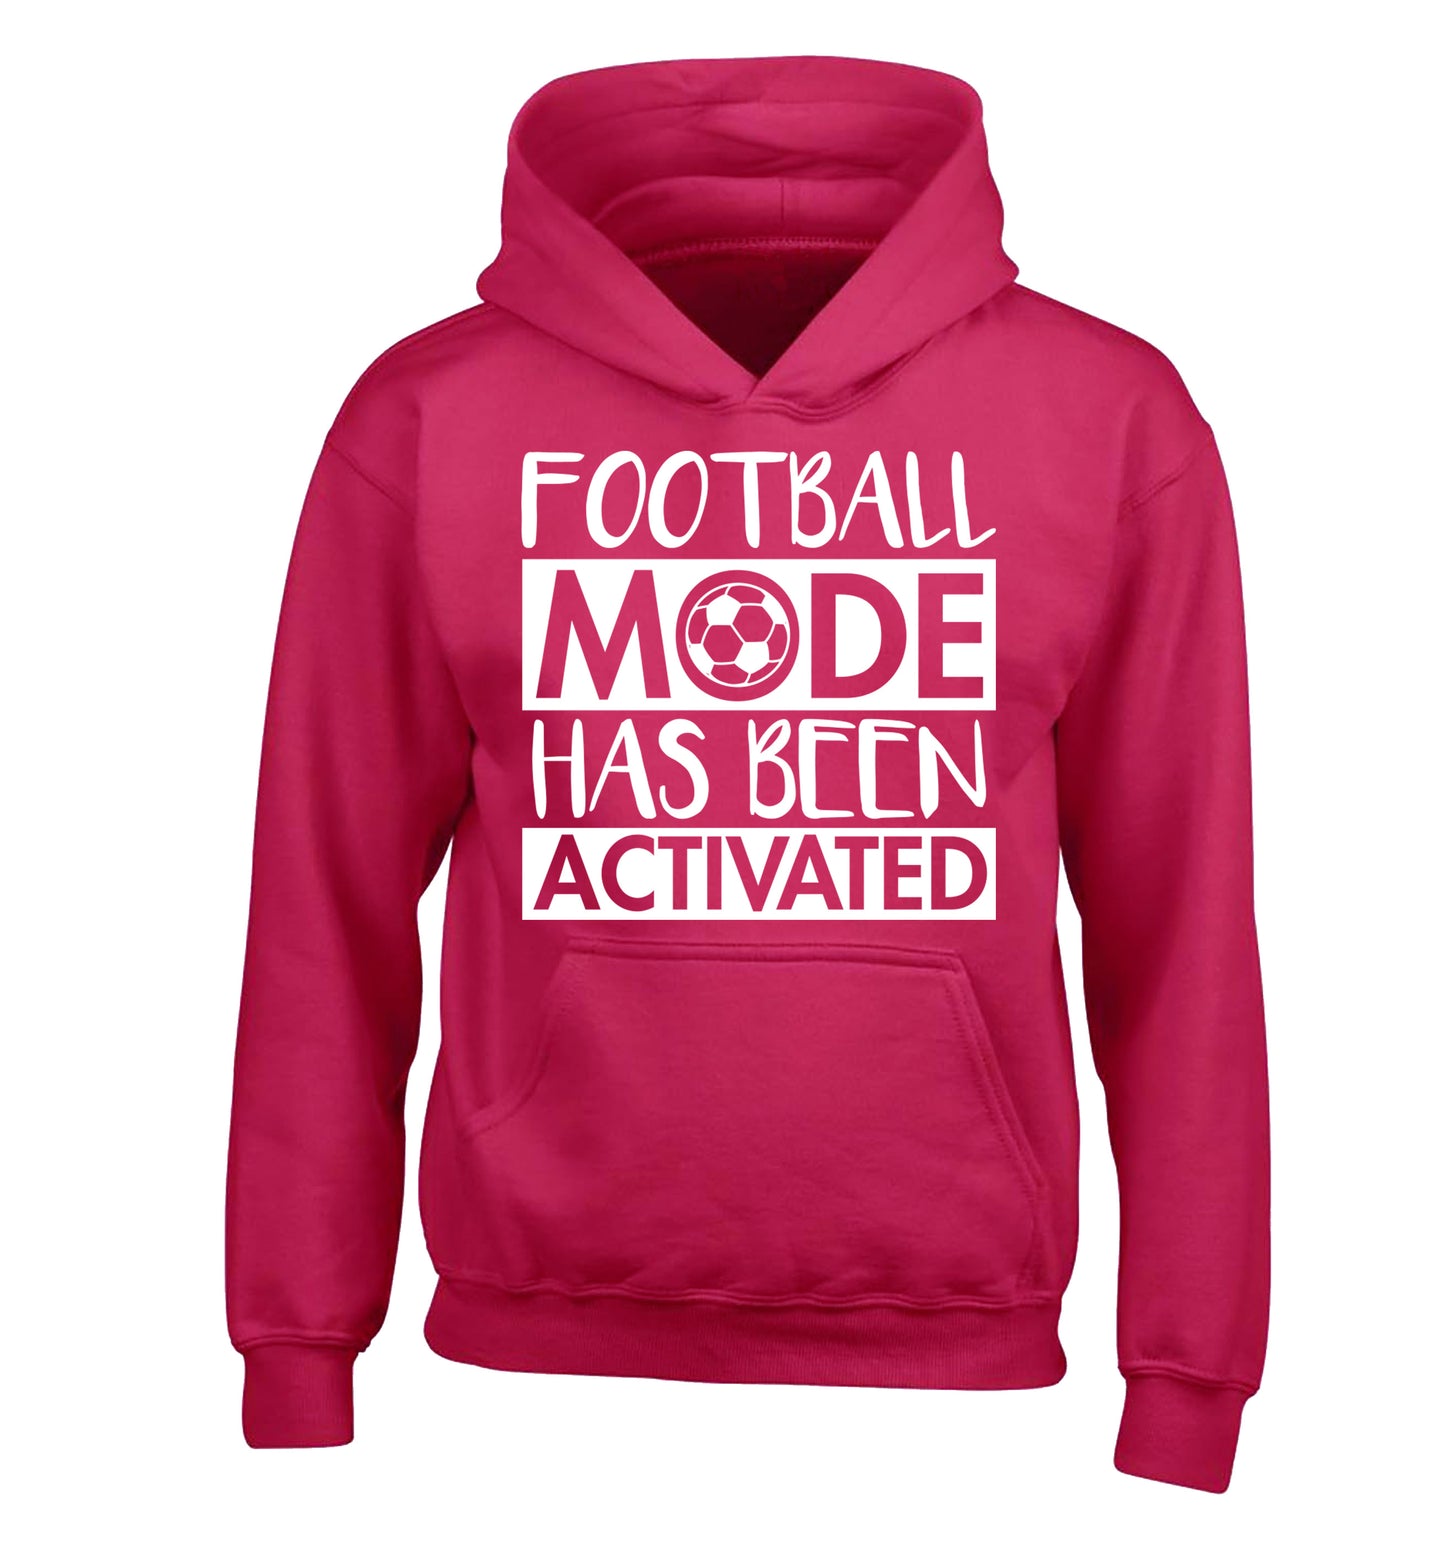 Football mode has been activated children's pink hoodie 12-14 Years